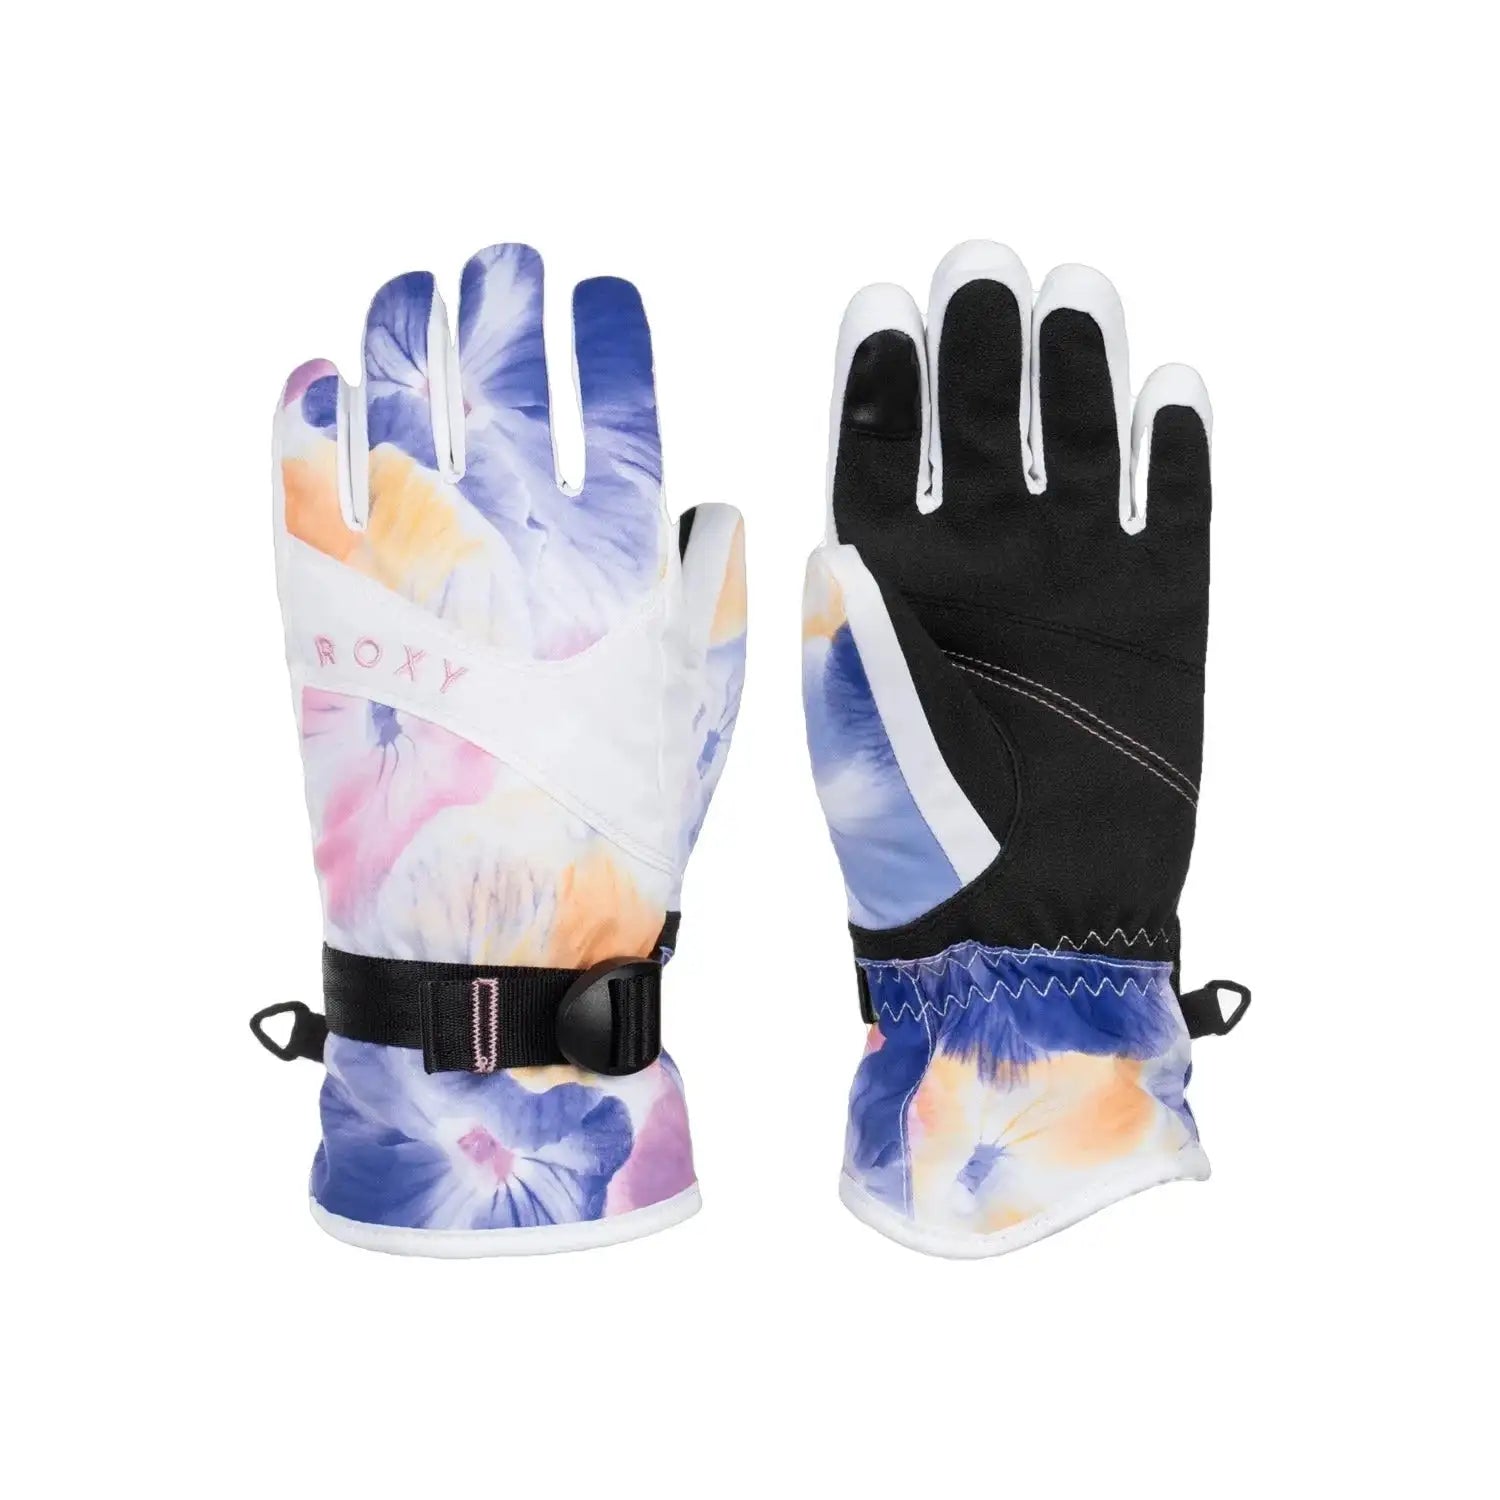 G's Jetty Technical Ski/Snowboard Gloves